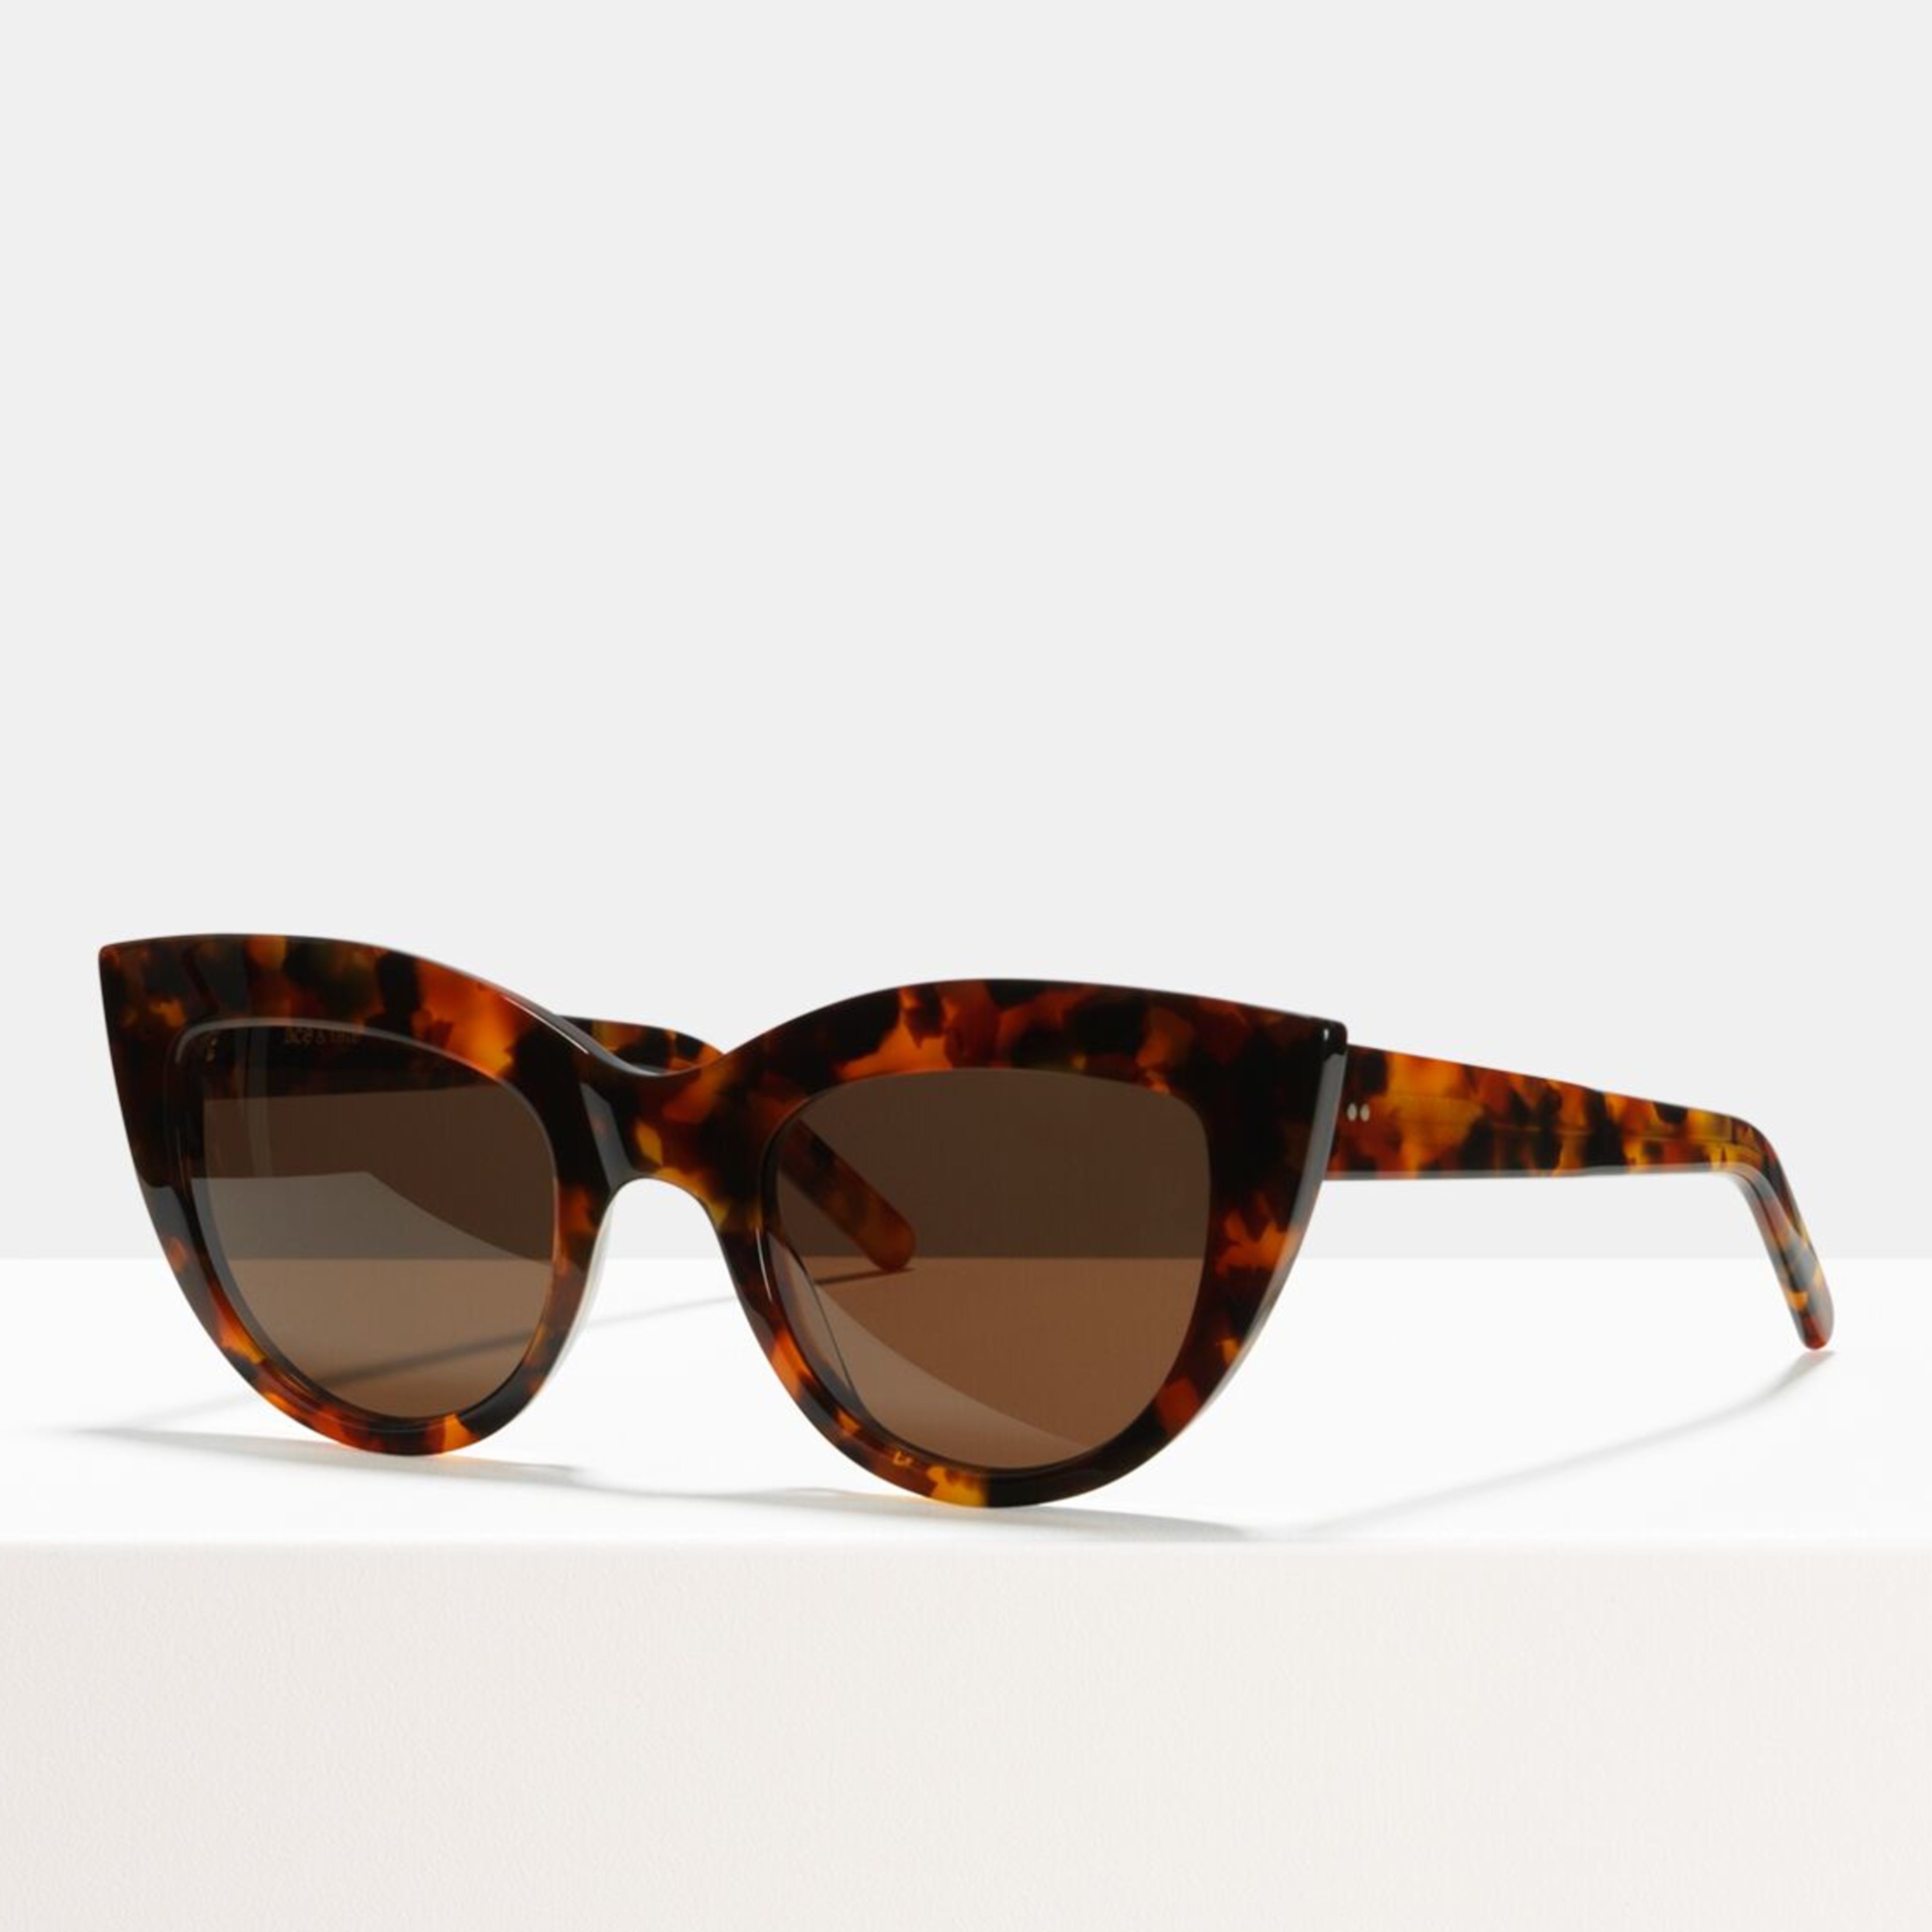 Ace & Tate Sunglasses |  acetato in Marrón, Naranja